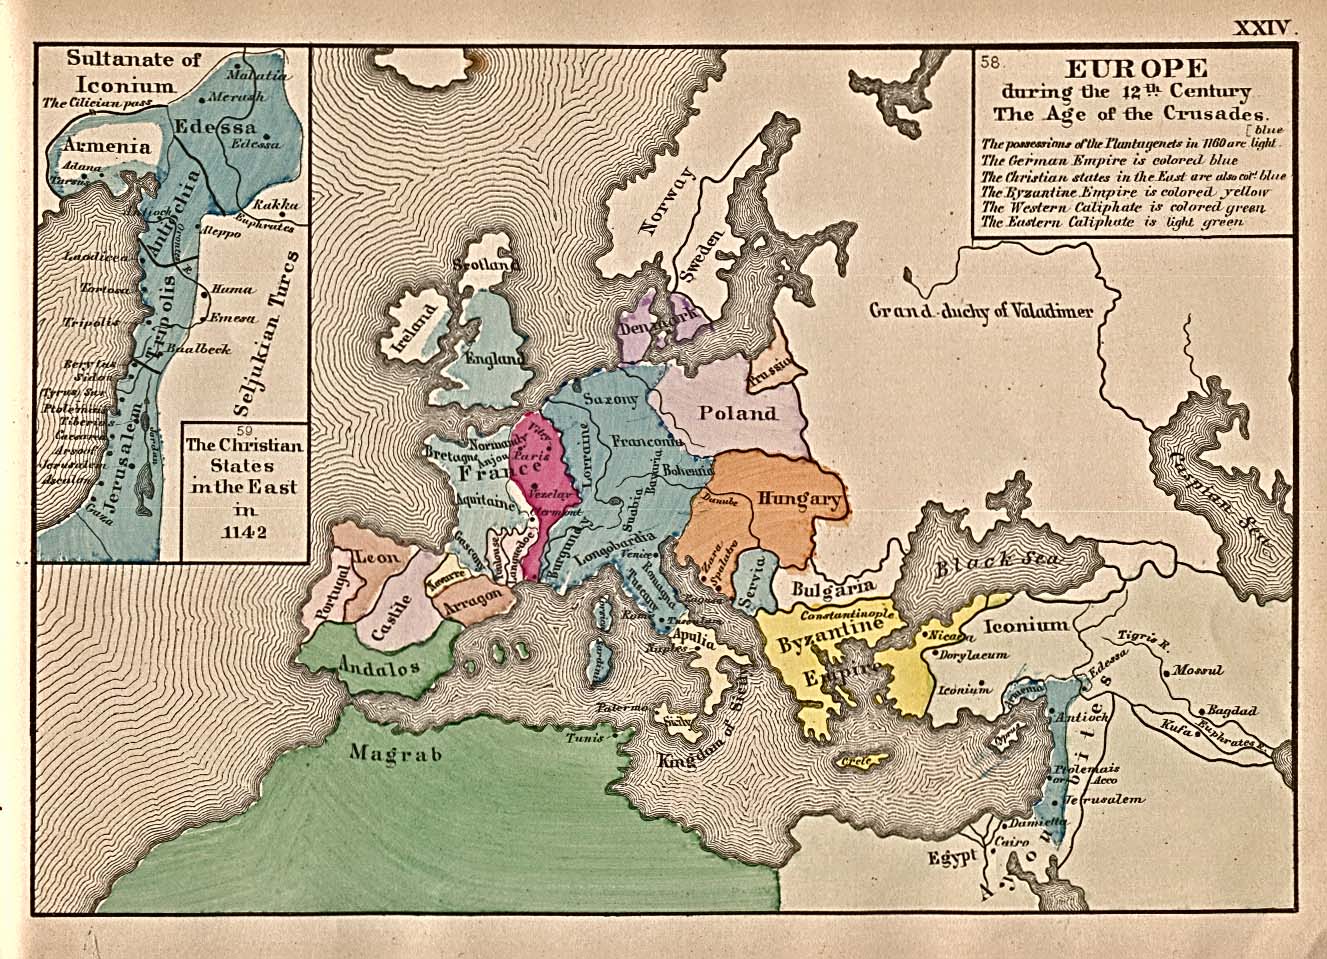 https://www.lib.utexas.edu/maps/historical/europe_12thcentury_1884.jpg